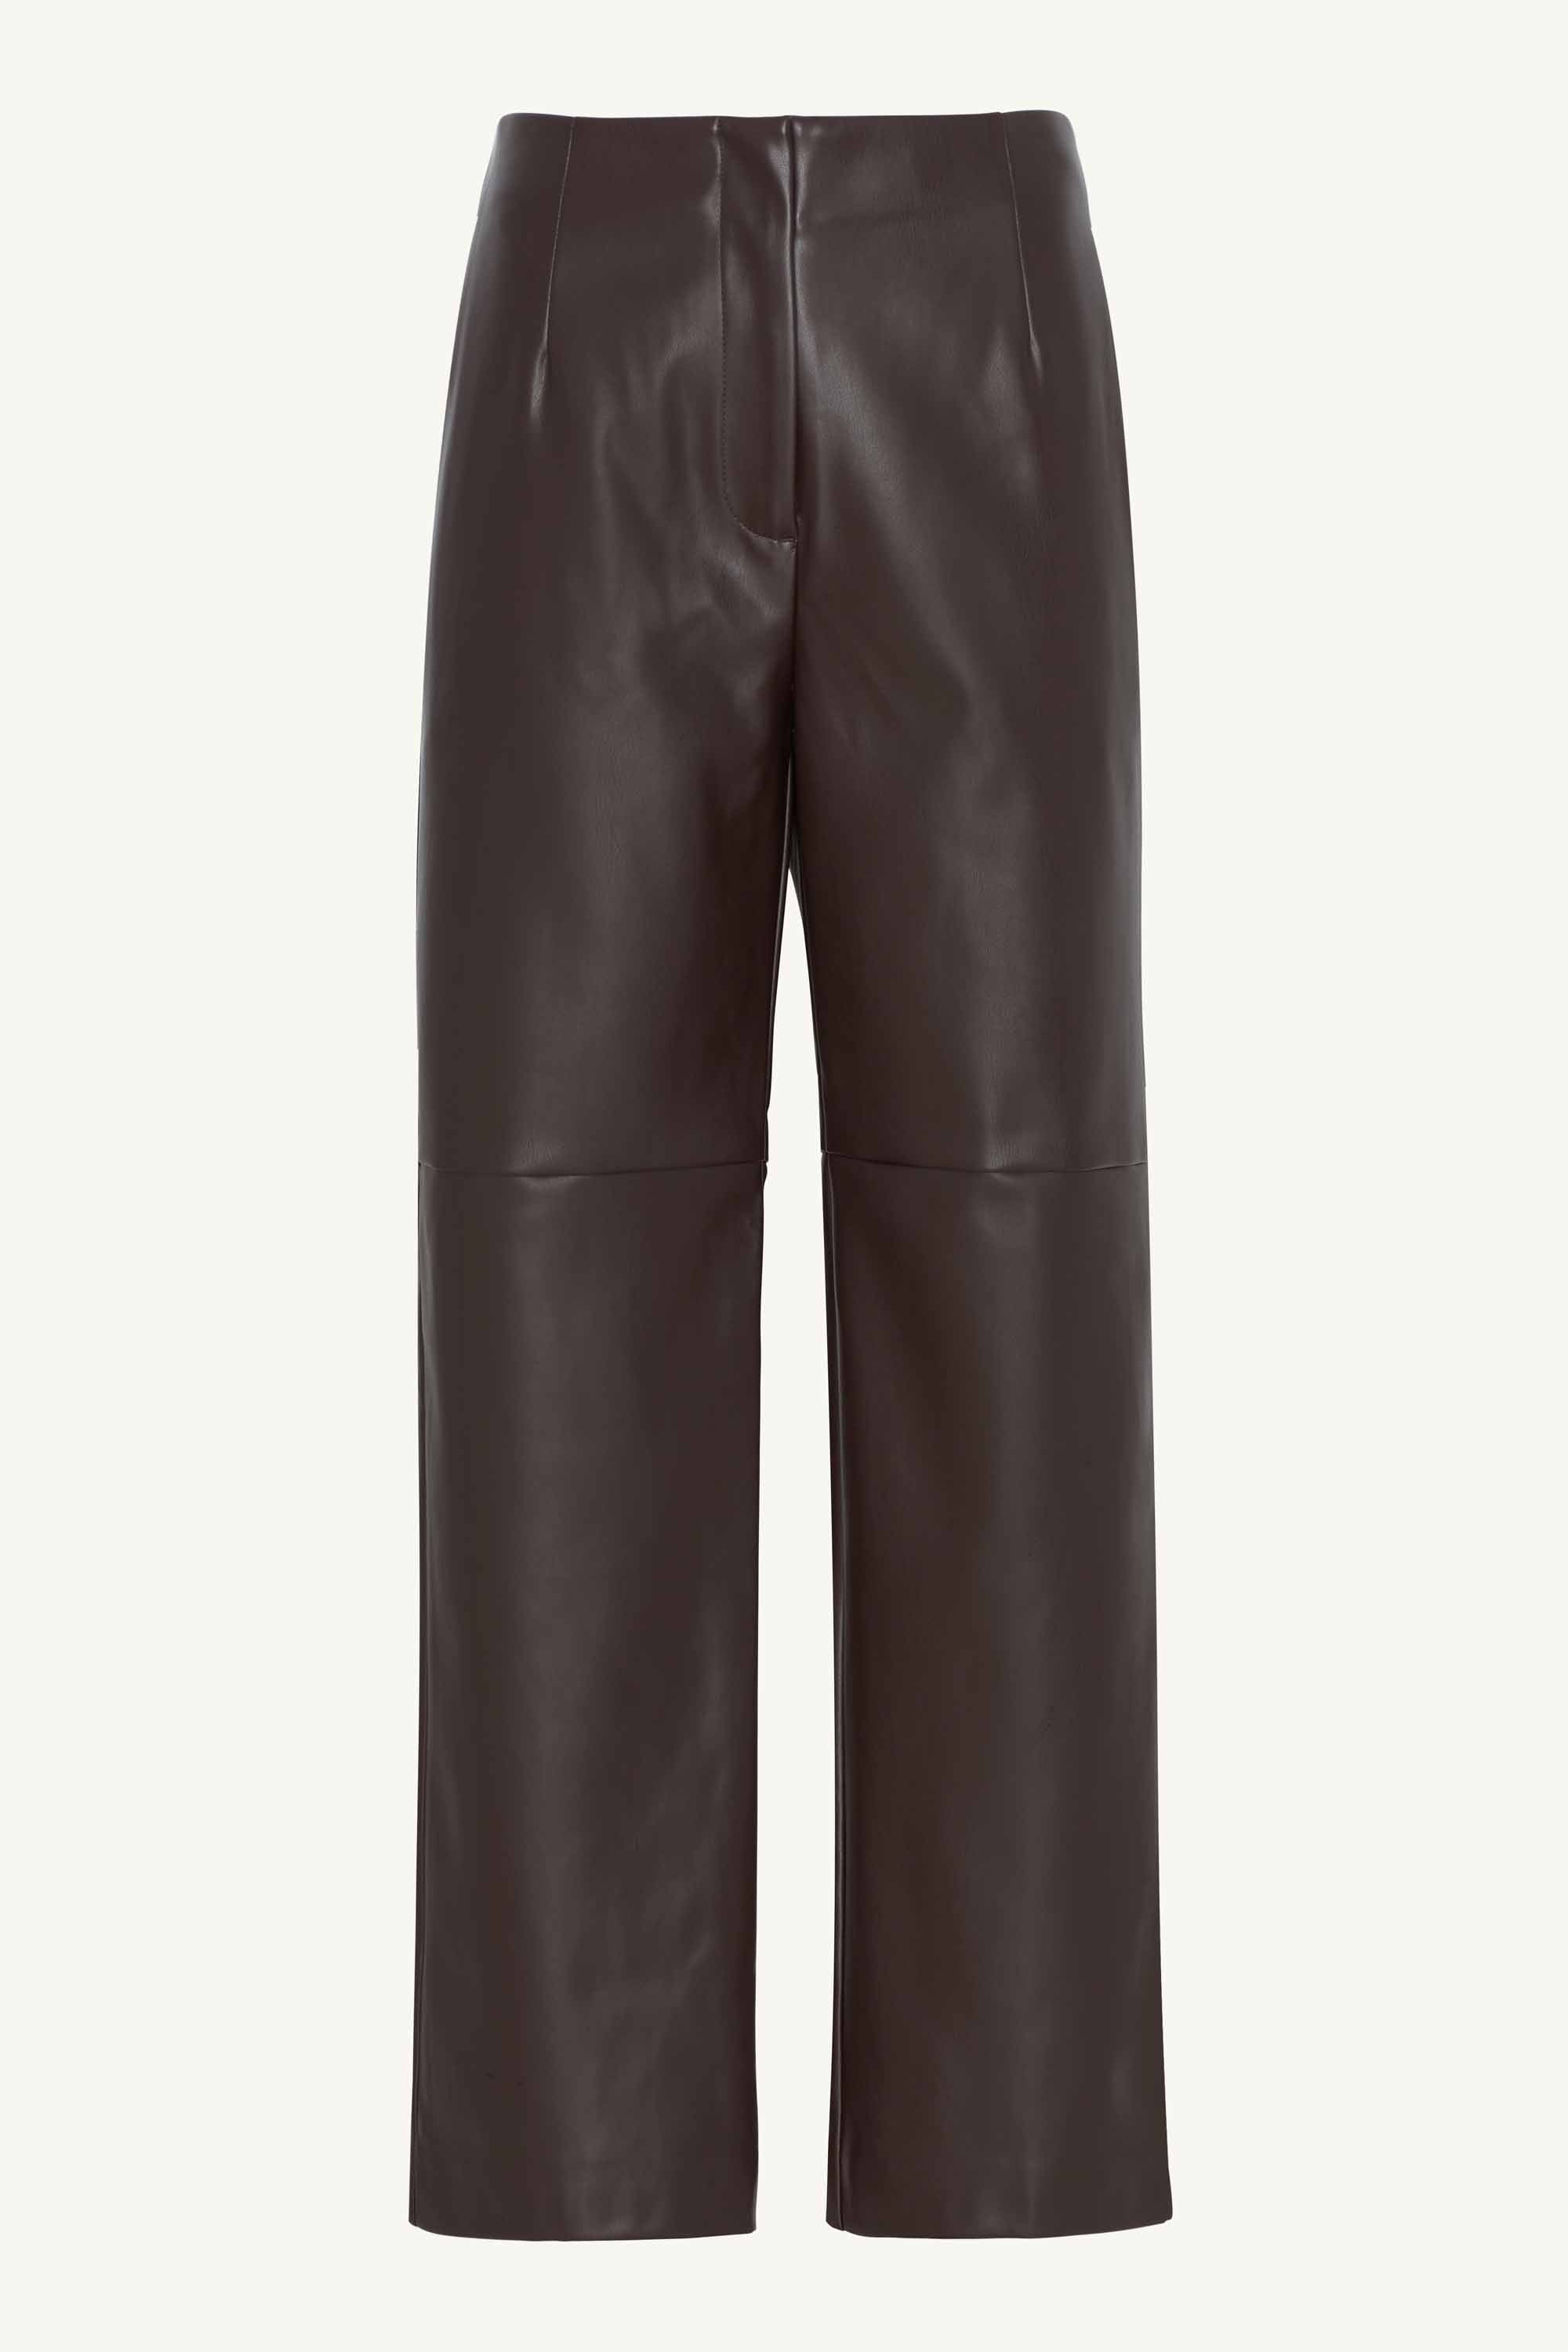 Vegan Leather Wide Leg Trousers - Java Clothing Veiled 